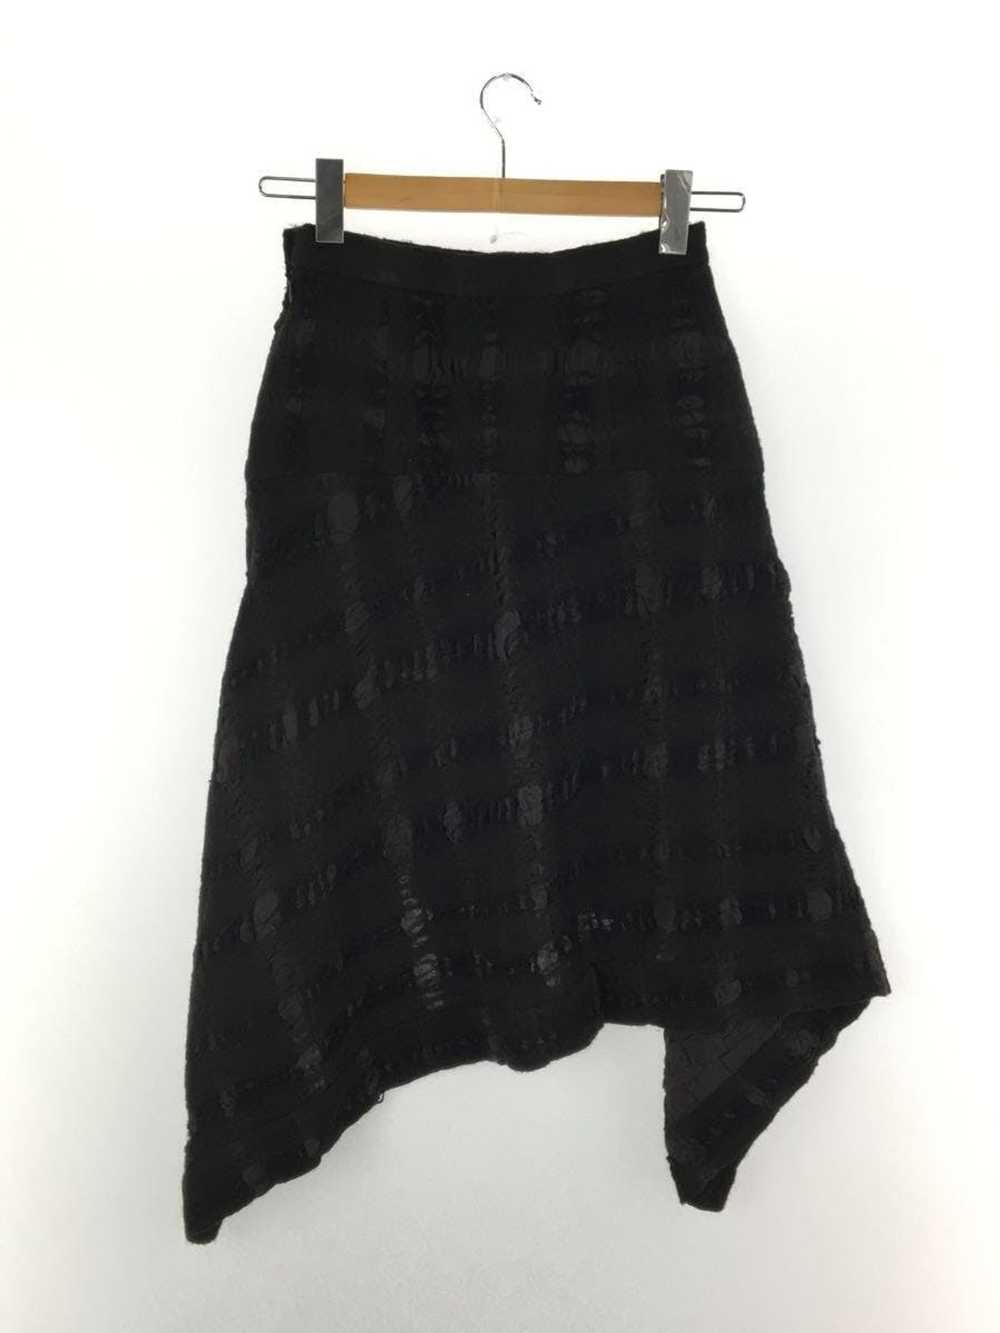 Vivienne Westwood Asymmetrical Stitch Skirt - image 2